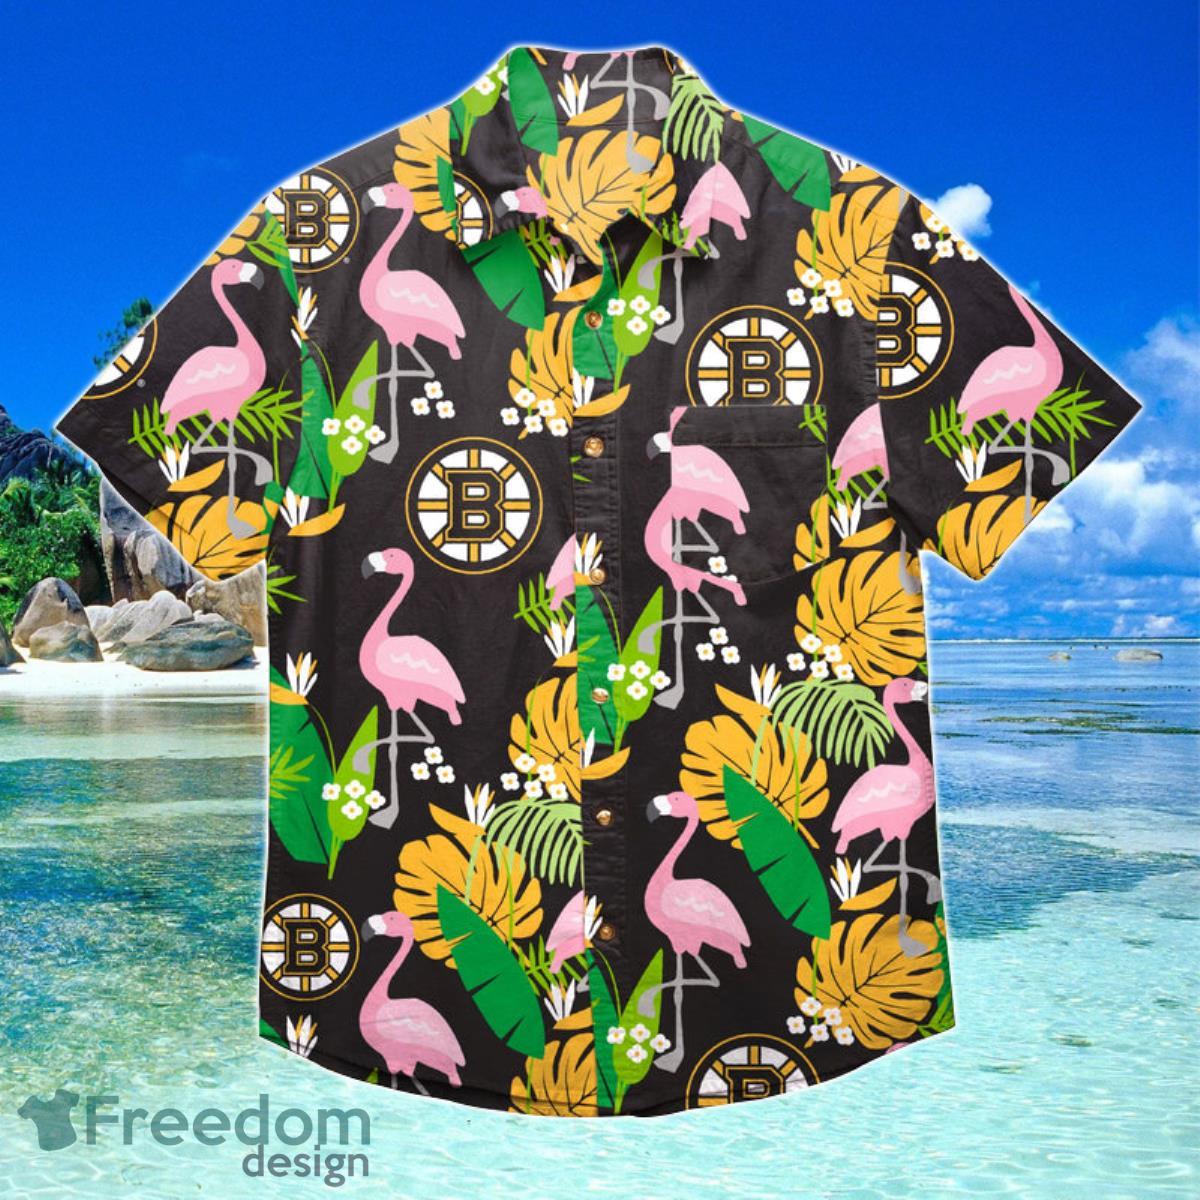 Boston bruins hawaiian shirt - Ingenious Gifts Your Whole Family